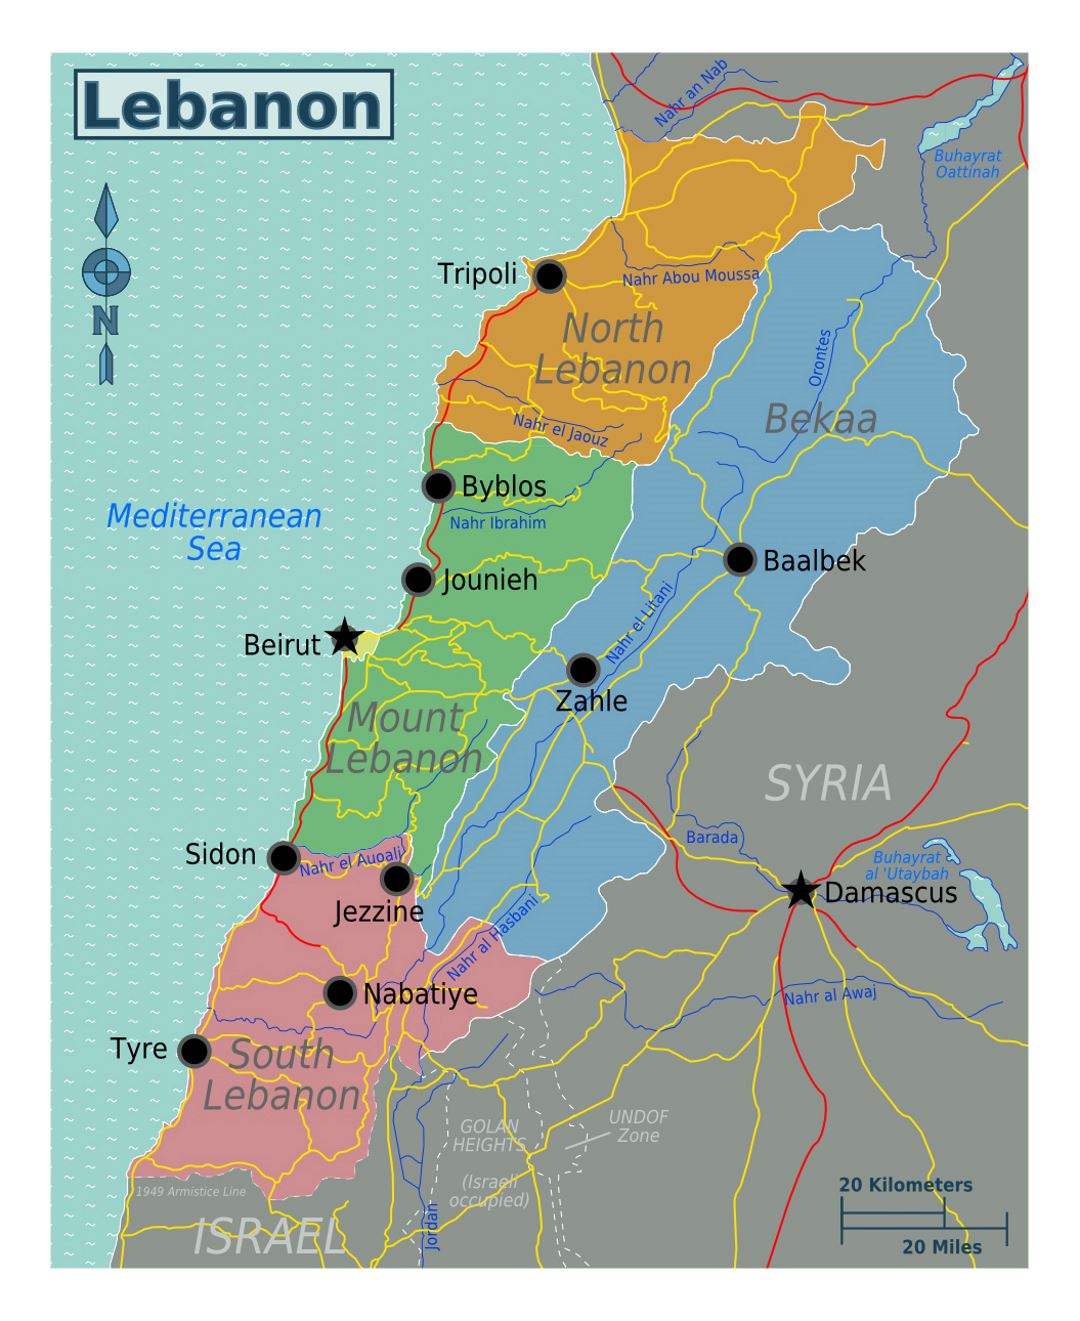 Detailed regions map of Lebanon